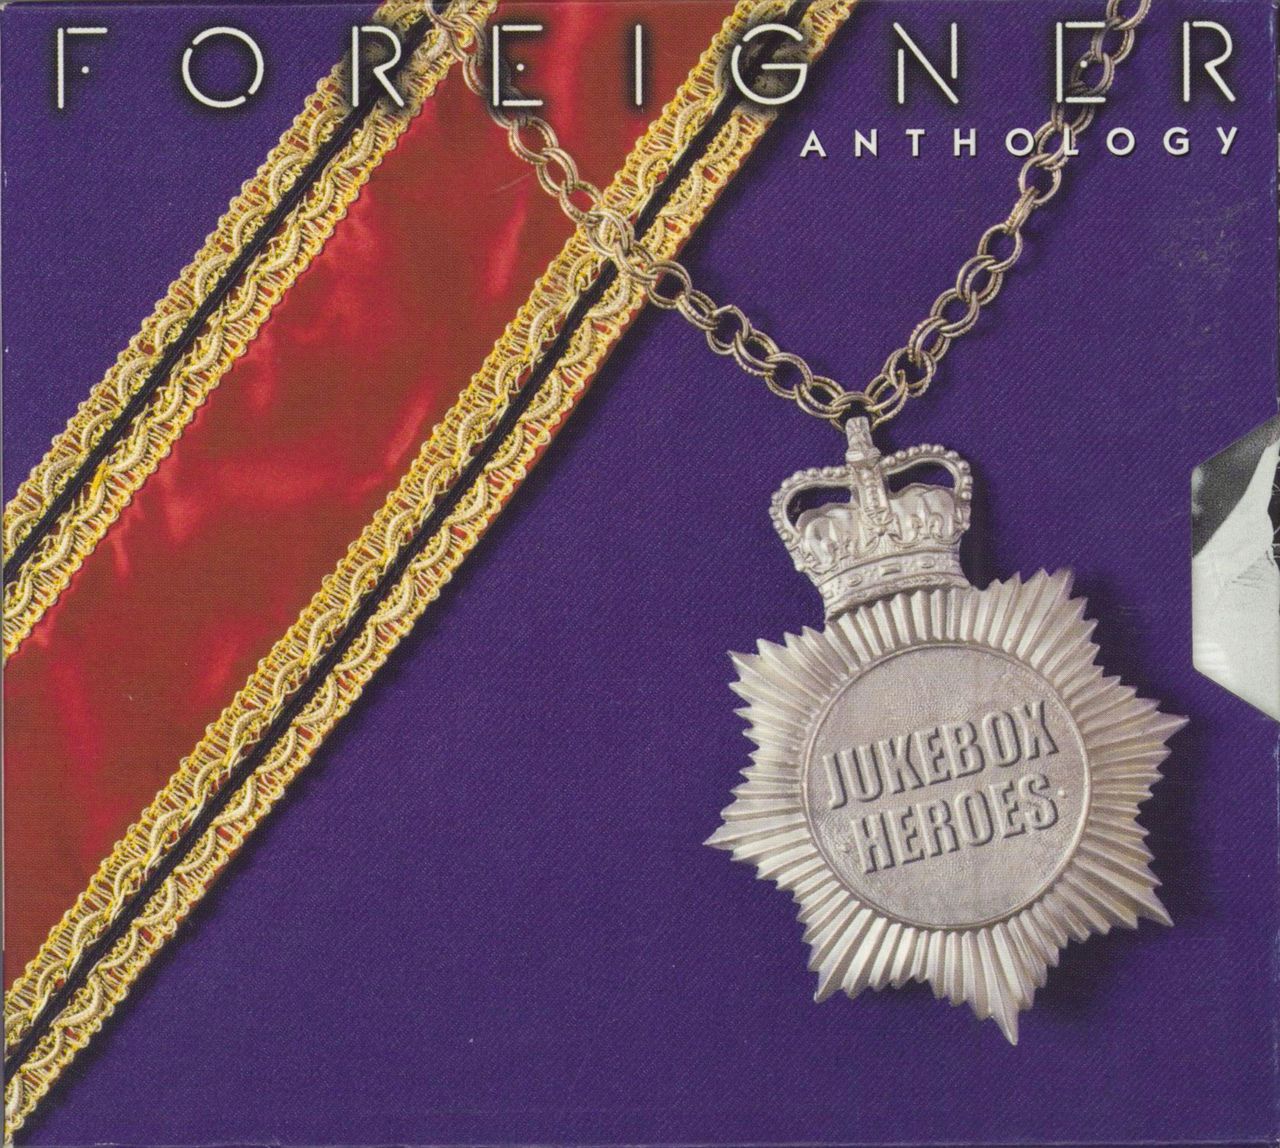 Foreigner Foreigner Anthology: Jukebox Heroes UK 2 CD album set (Double CD) 8122-79884-2